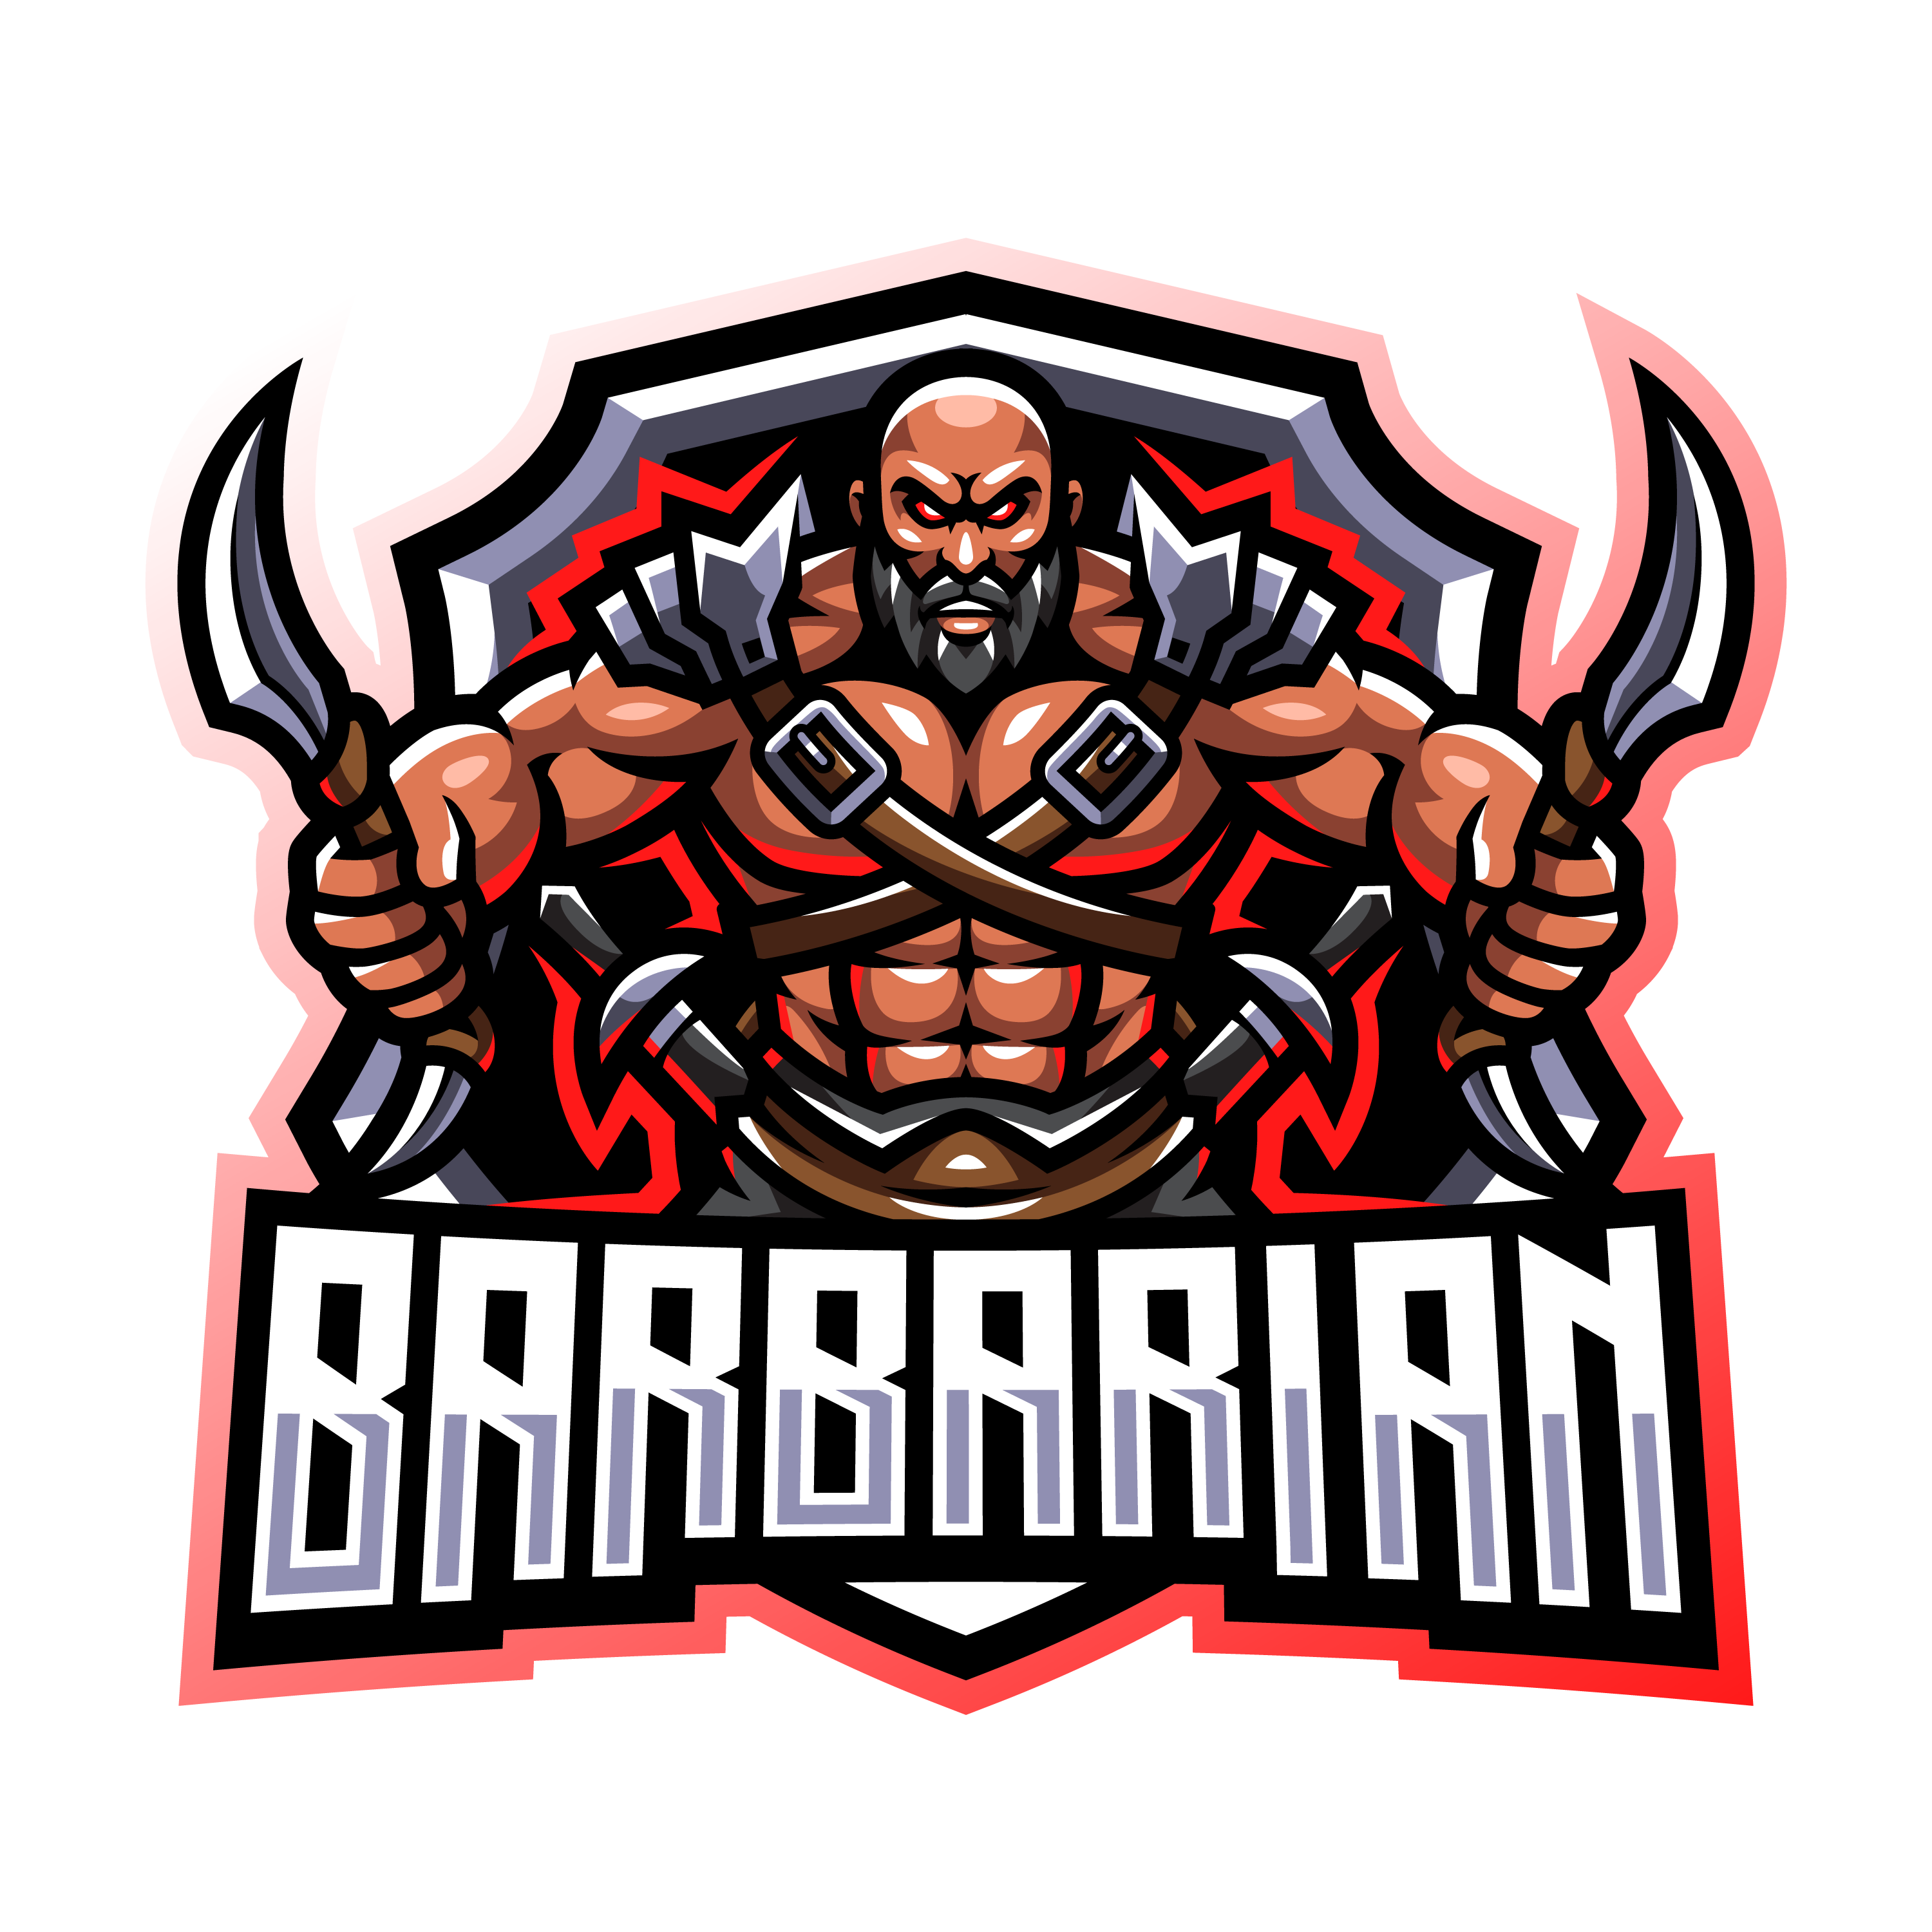 Barbarian Gaming Logo Template